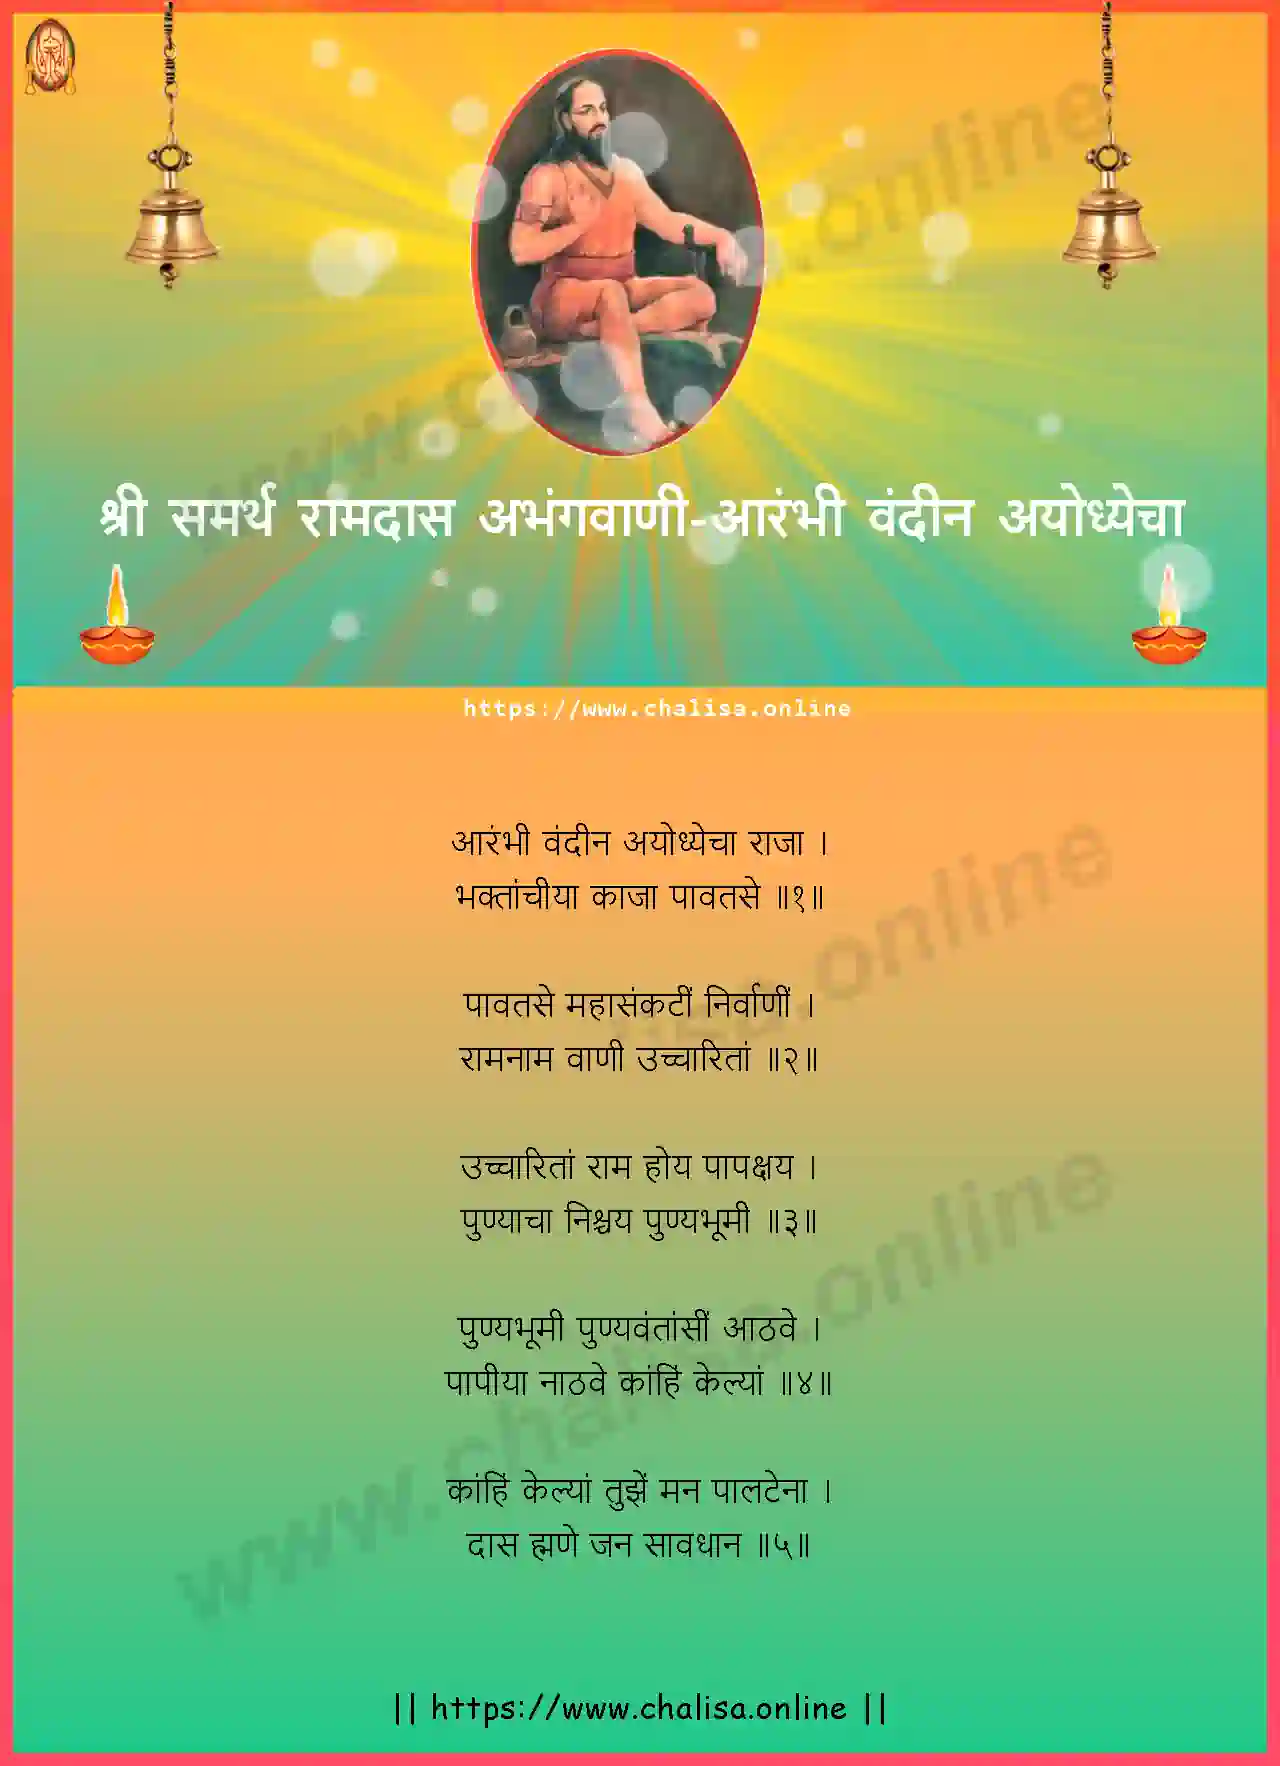 aarambhi-vandin-shri-samarth-ramdas-abhang-marathi-lyrics-download